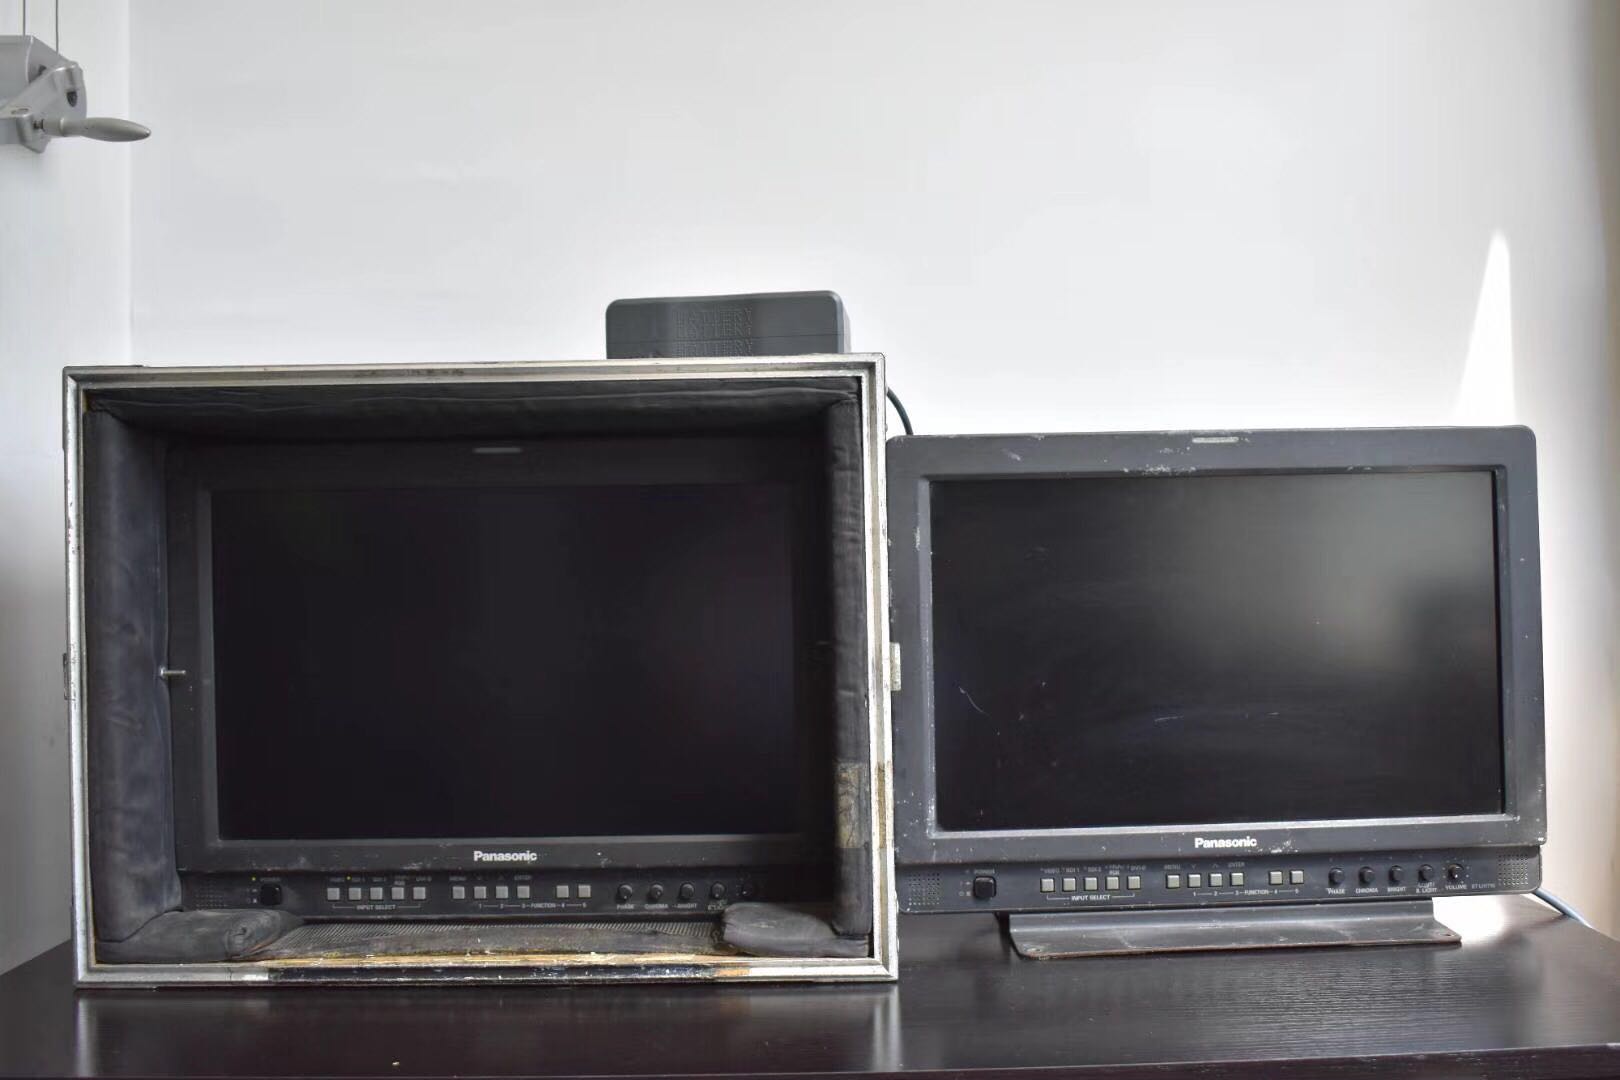  Sold second-hand Panasonic 1710 monitors